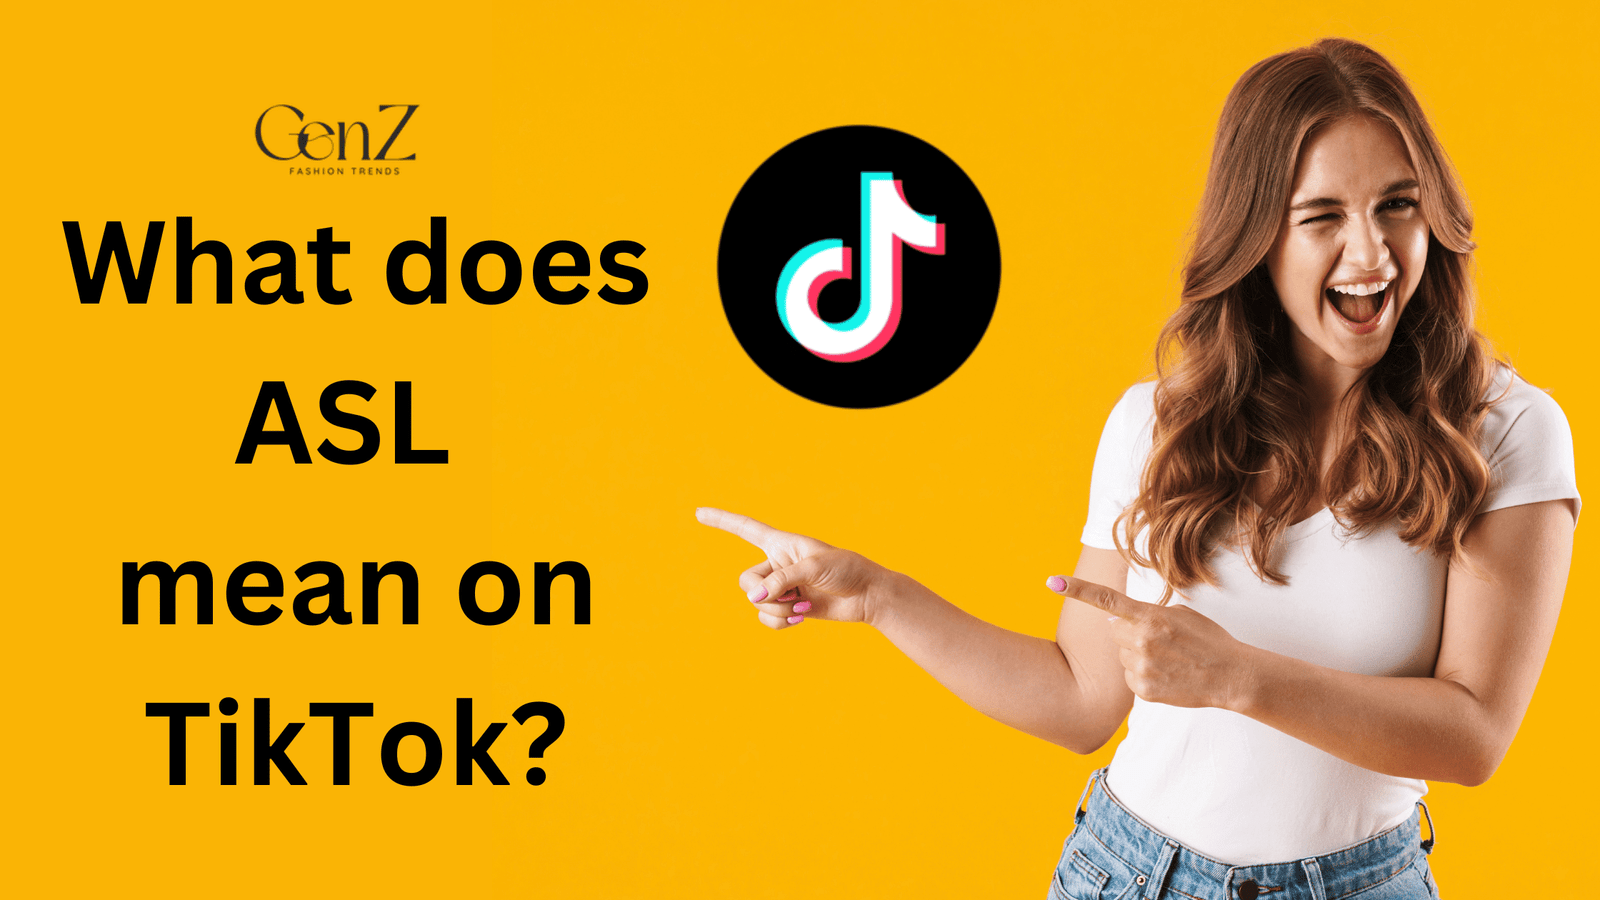 What Does ASL Mean on TikTok? Details on the Social Media Slang Term